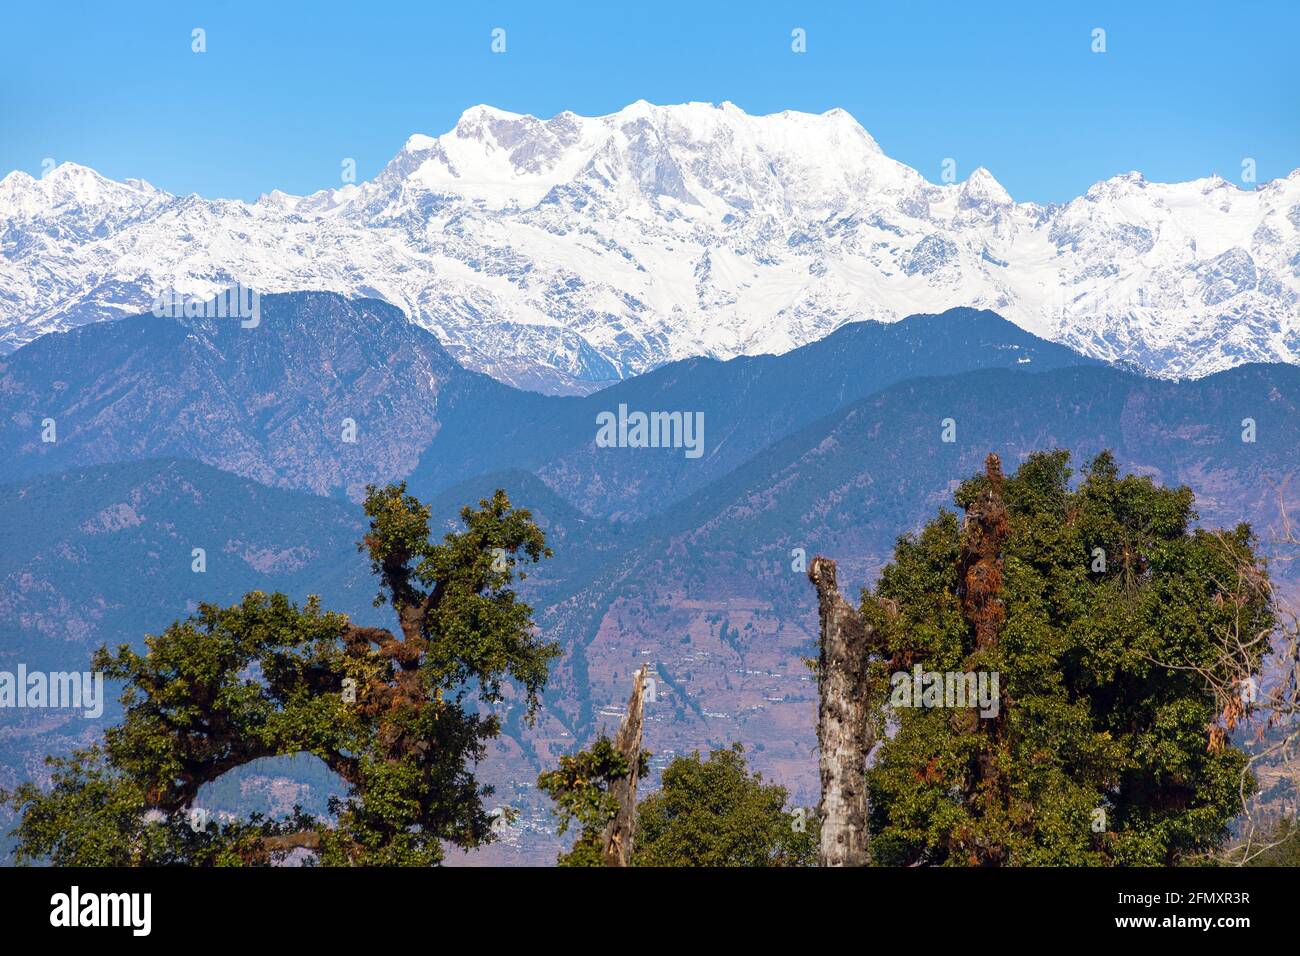 Mount Chaukhamba and woodland, Himalaya, panoramic view of Indian Himalayas mountains, great Himalayan range, Uttarakhand India, Gangotri range Stock Photo